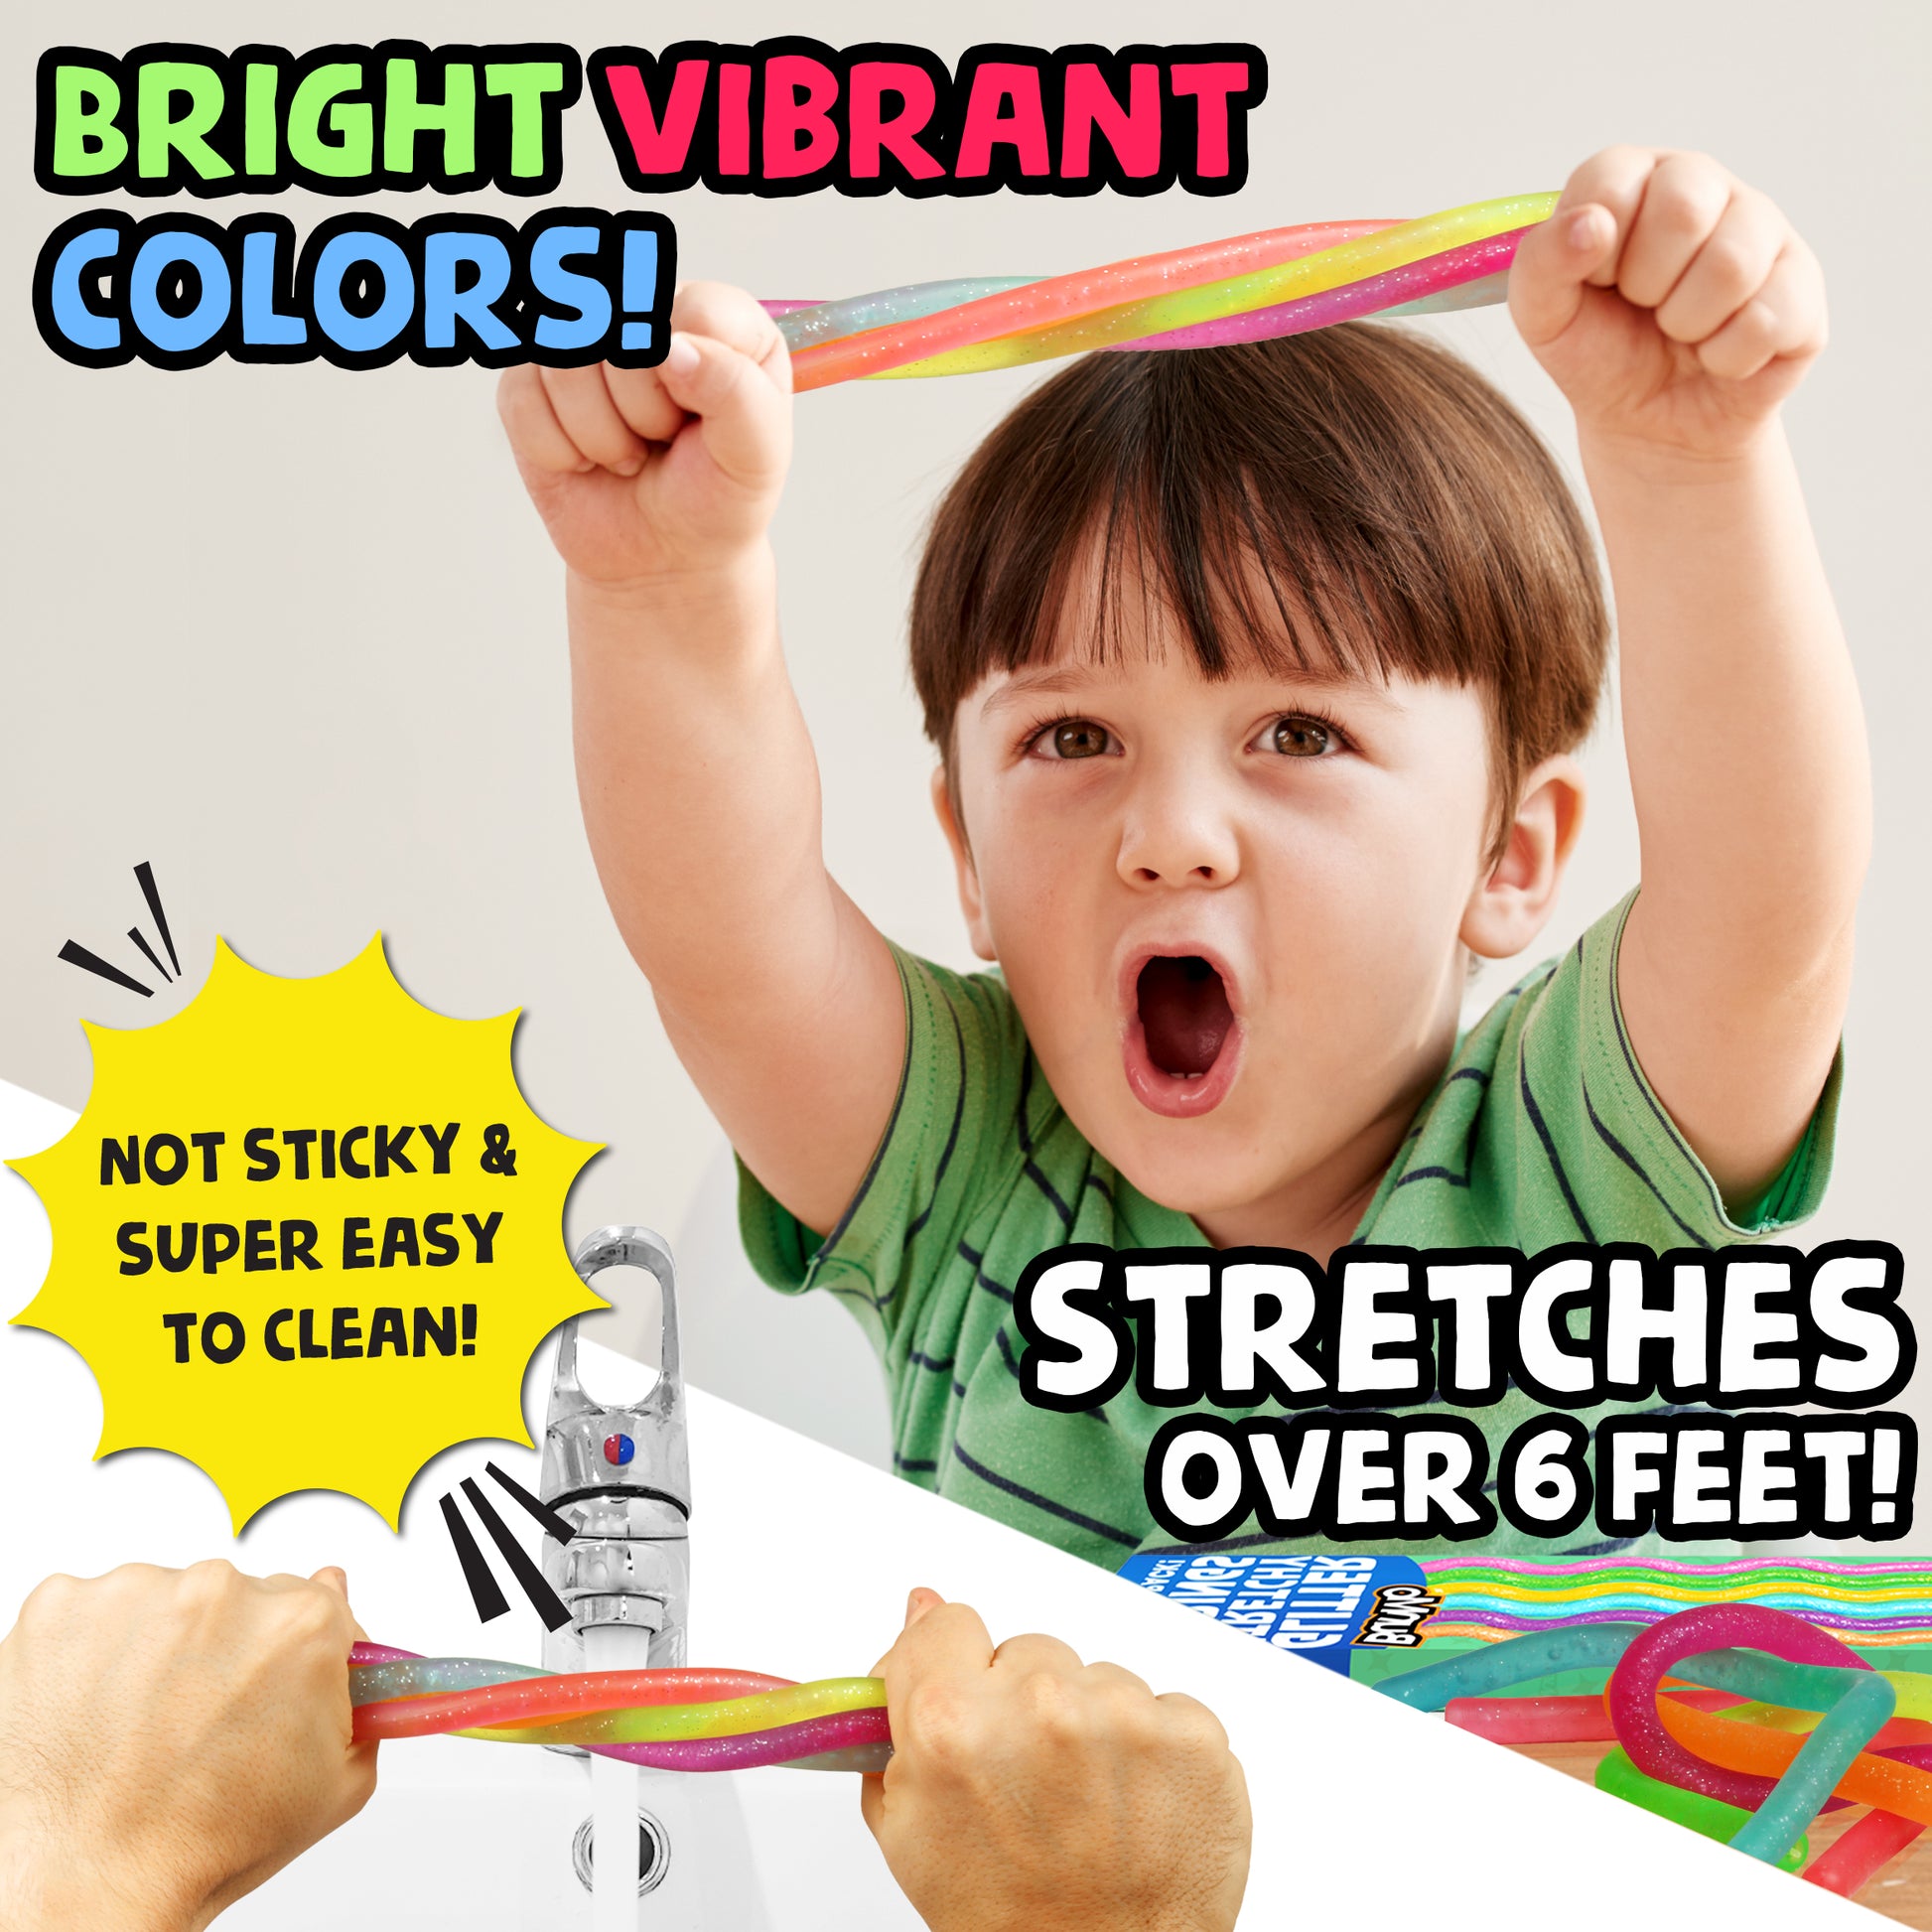 Shorties' Glitter Glow Stretchy Fidget Toys –